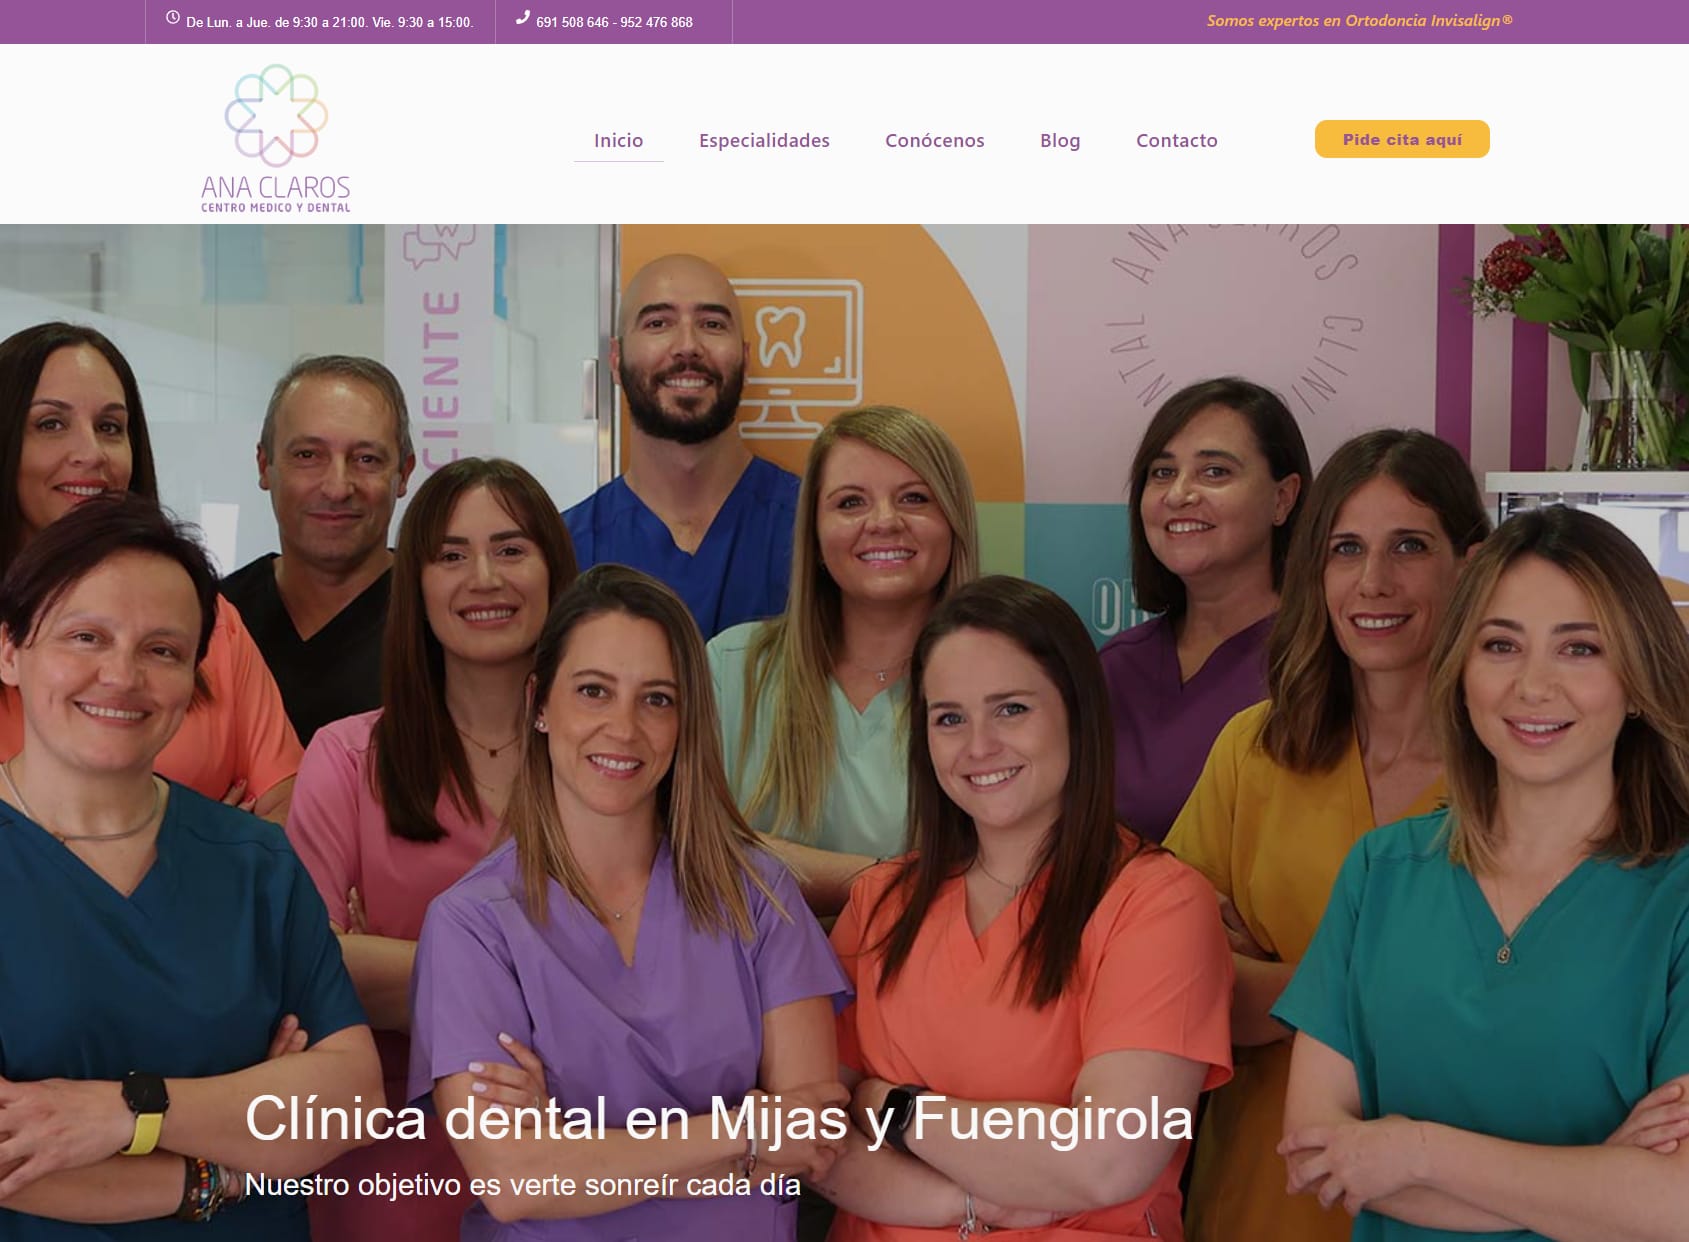 Centro Médico y Dental Ana Claros 952 47 68 68 - 691 508 646